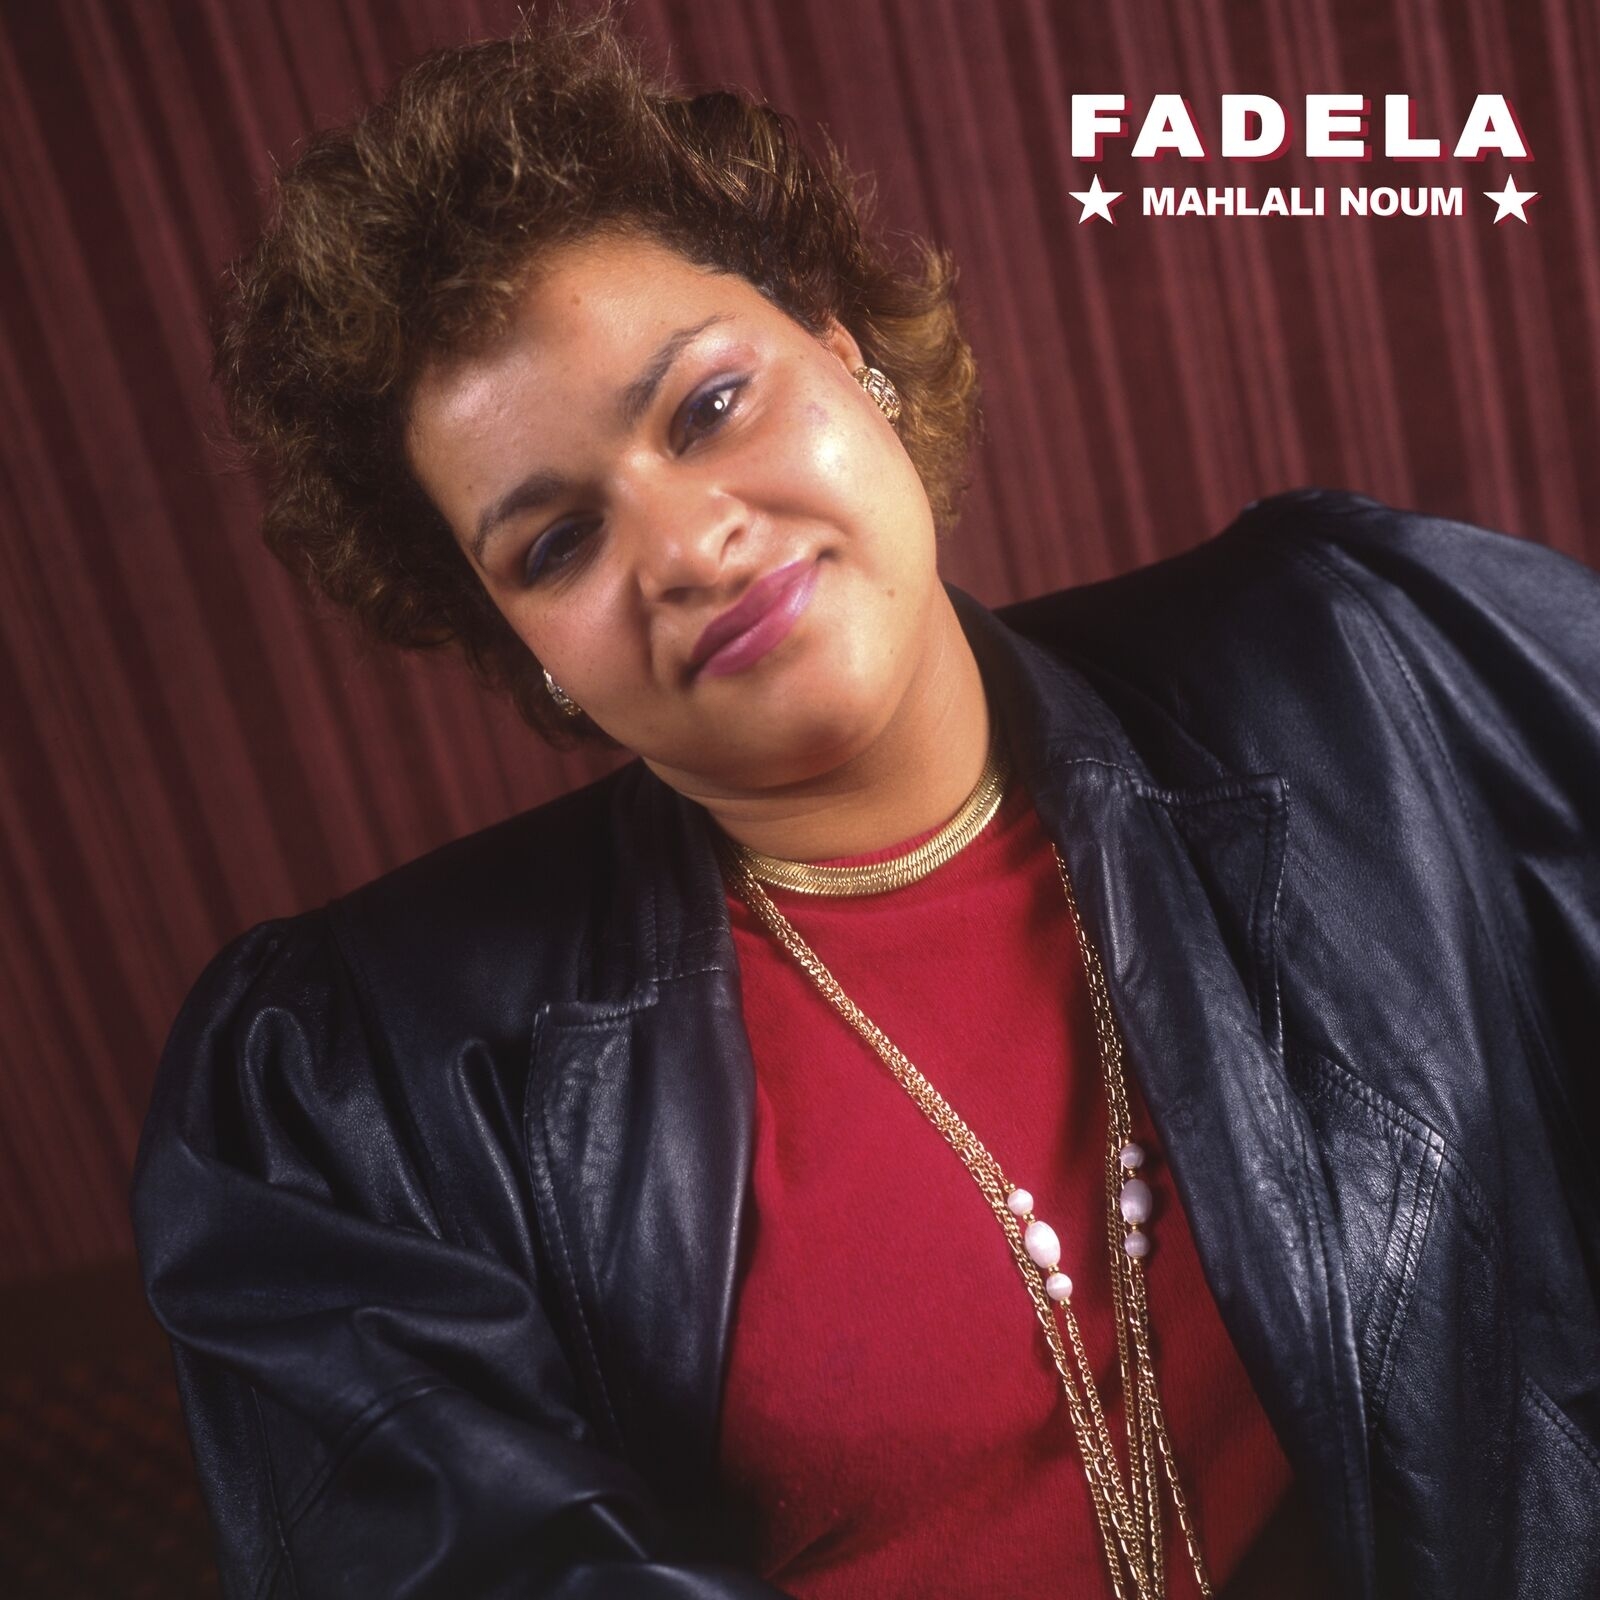 Album vinyle Fadela - Mahlali Noum de sur Scredboutique.com